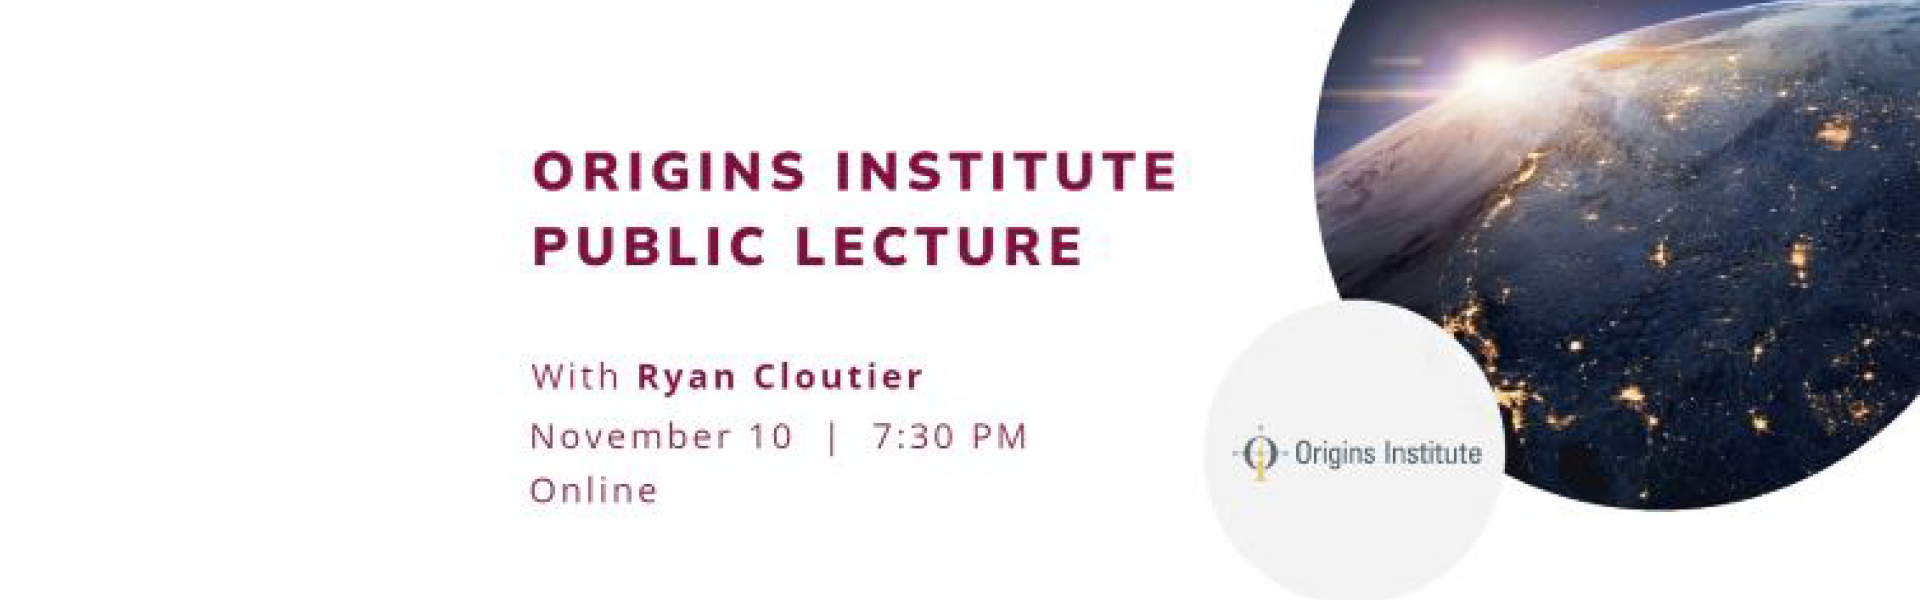 Origins Institute Public Lecture with Ryan Cloutier